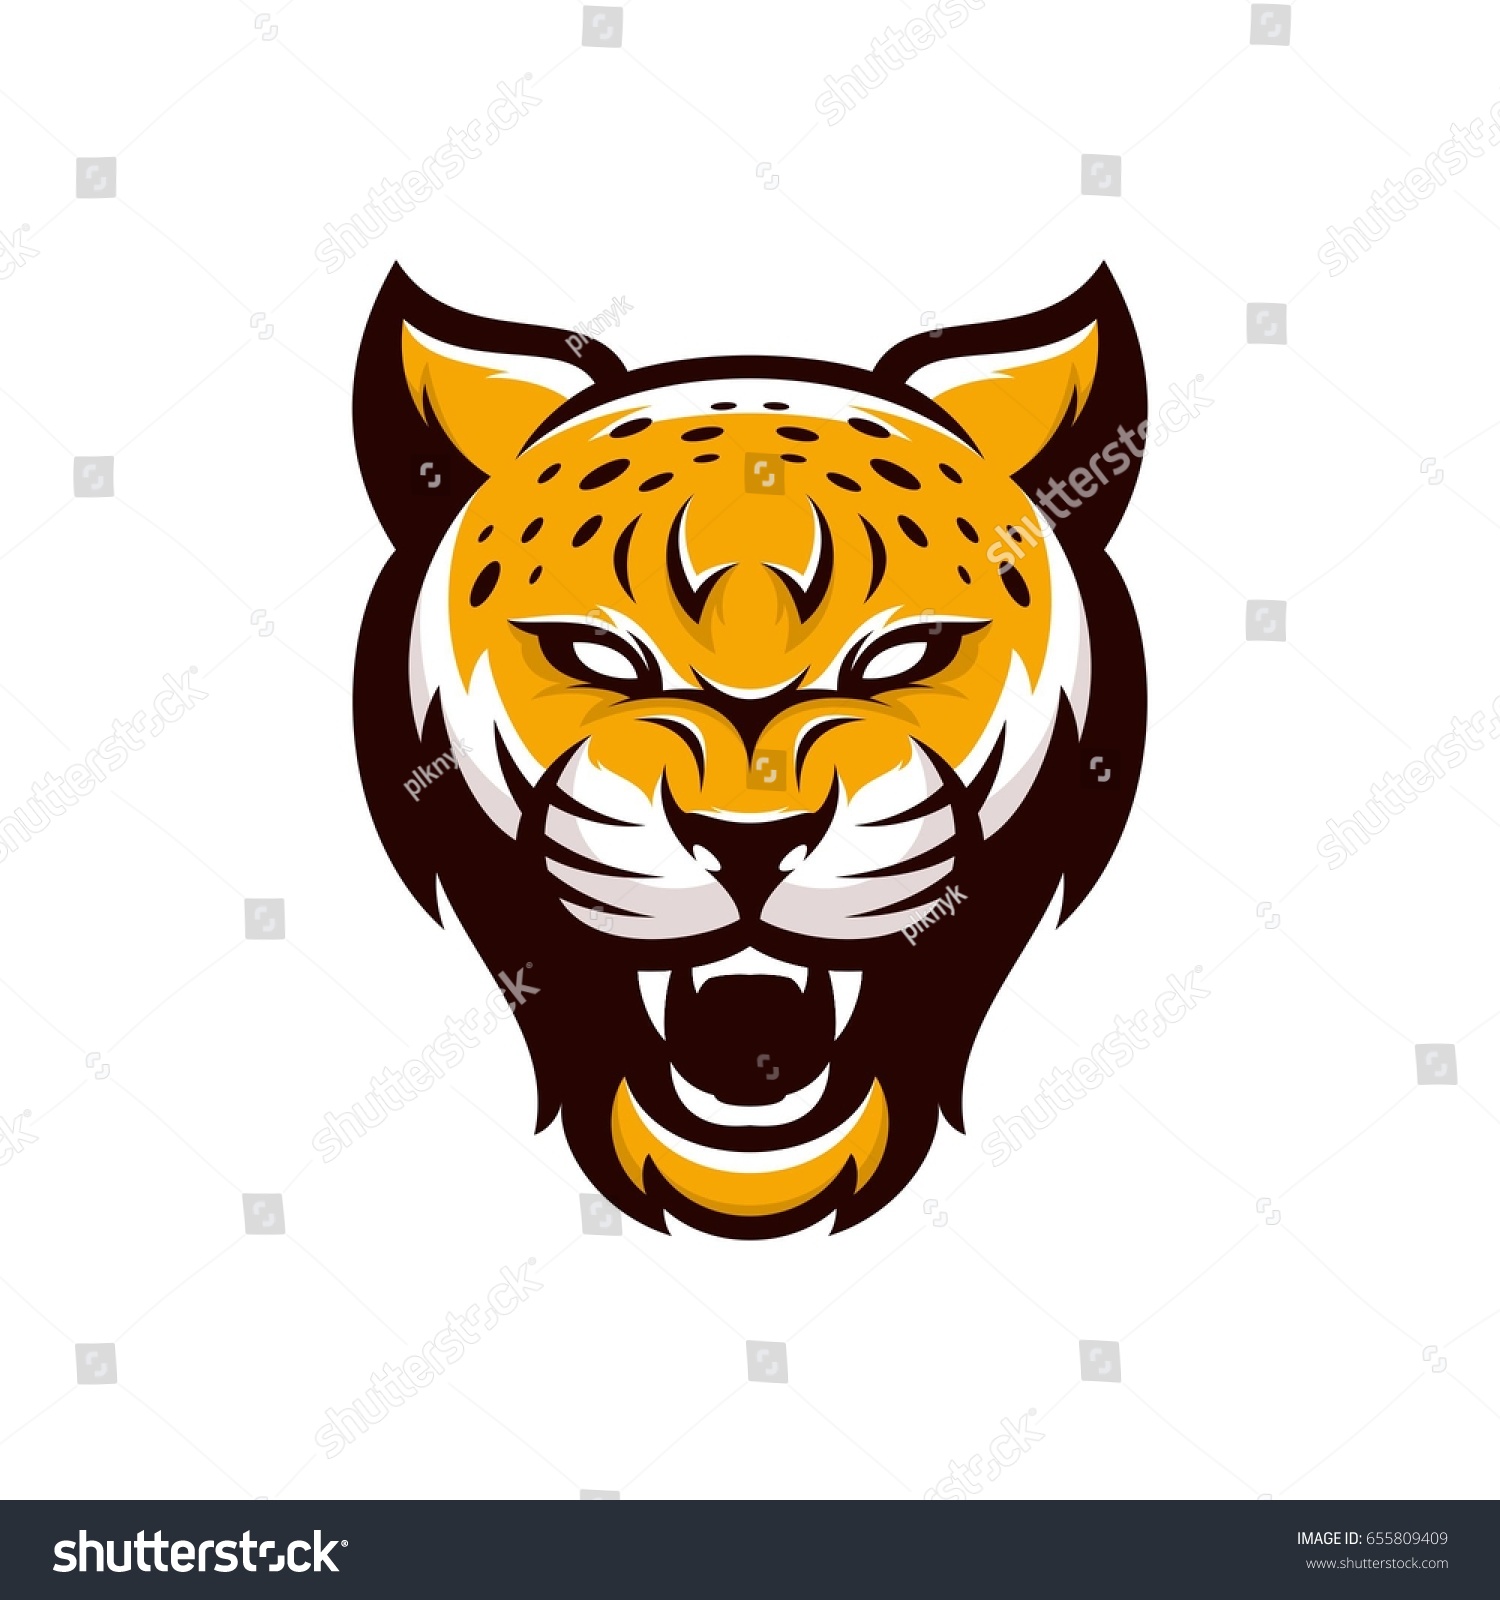 Cheetah Head Wild Mascot Head Vector Stock Vector (Royalty Free) 655809409